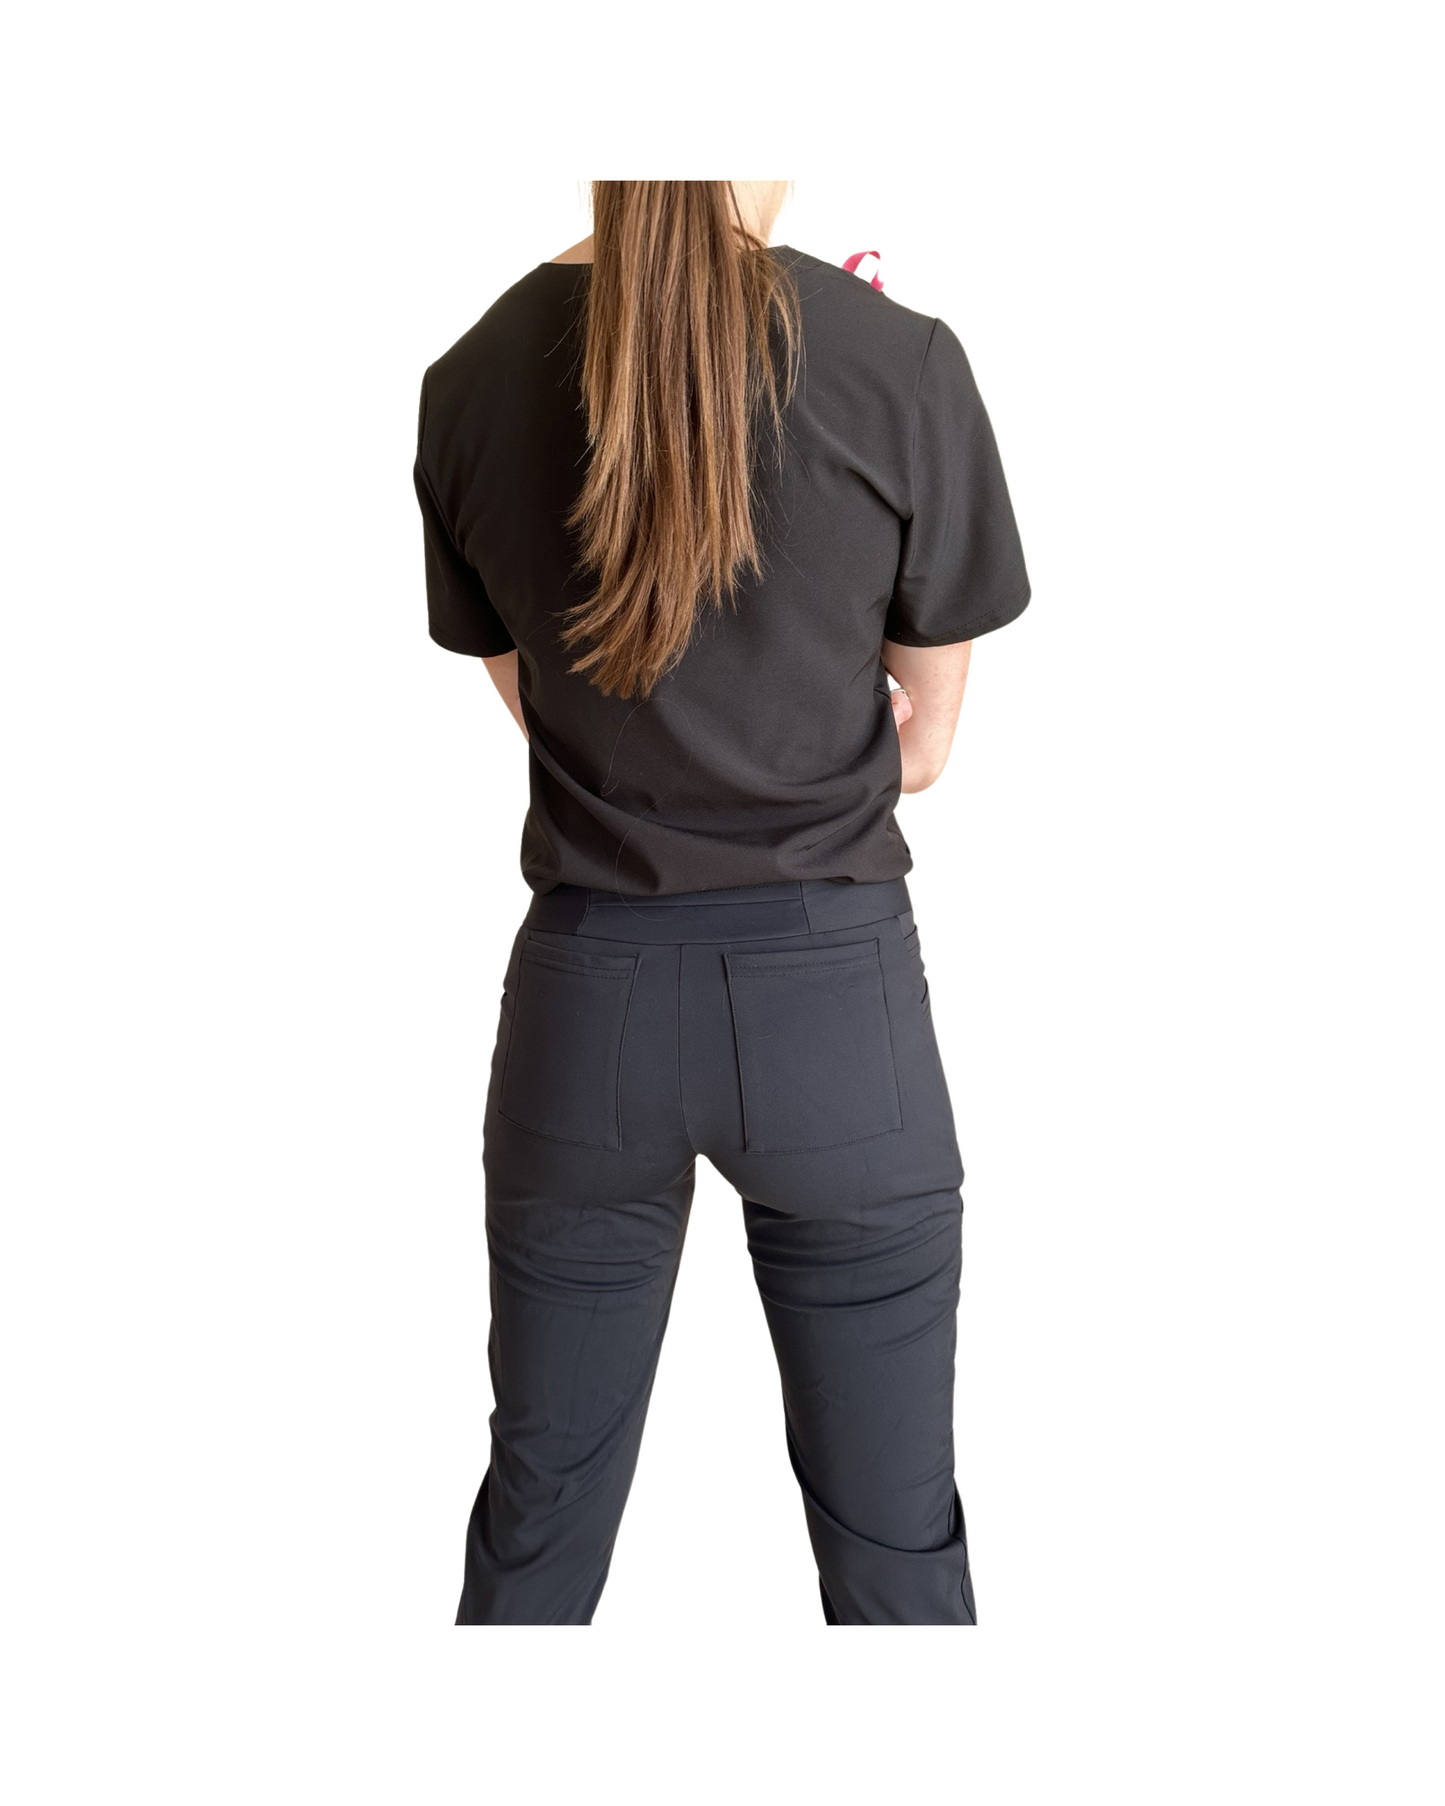 Women's Jogger Pants in Black